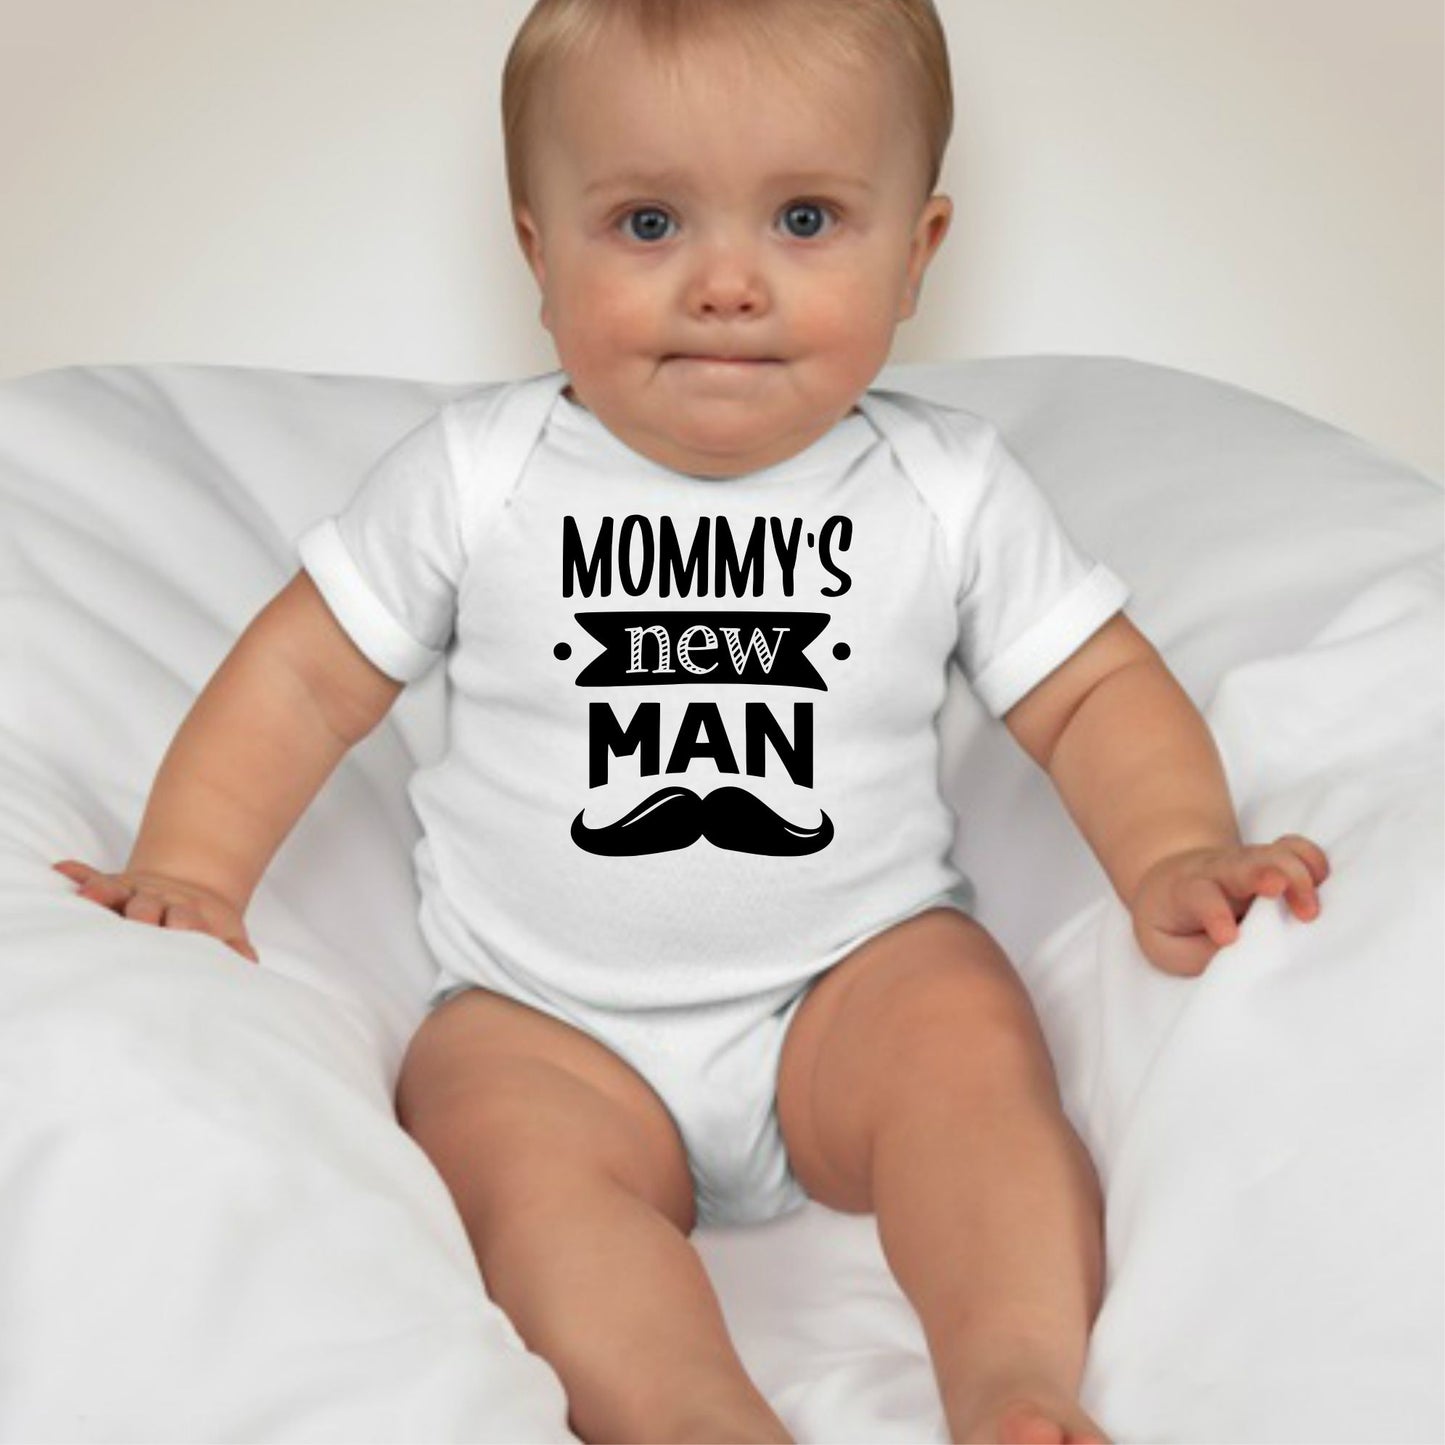 Baby Statement Onesies - Mommy's New Man